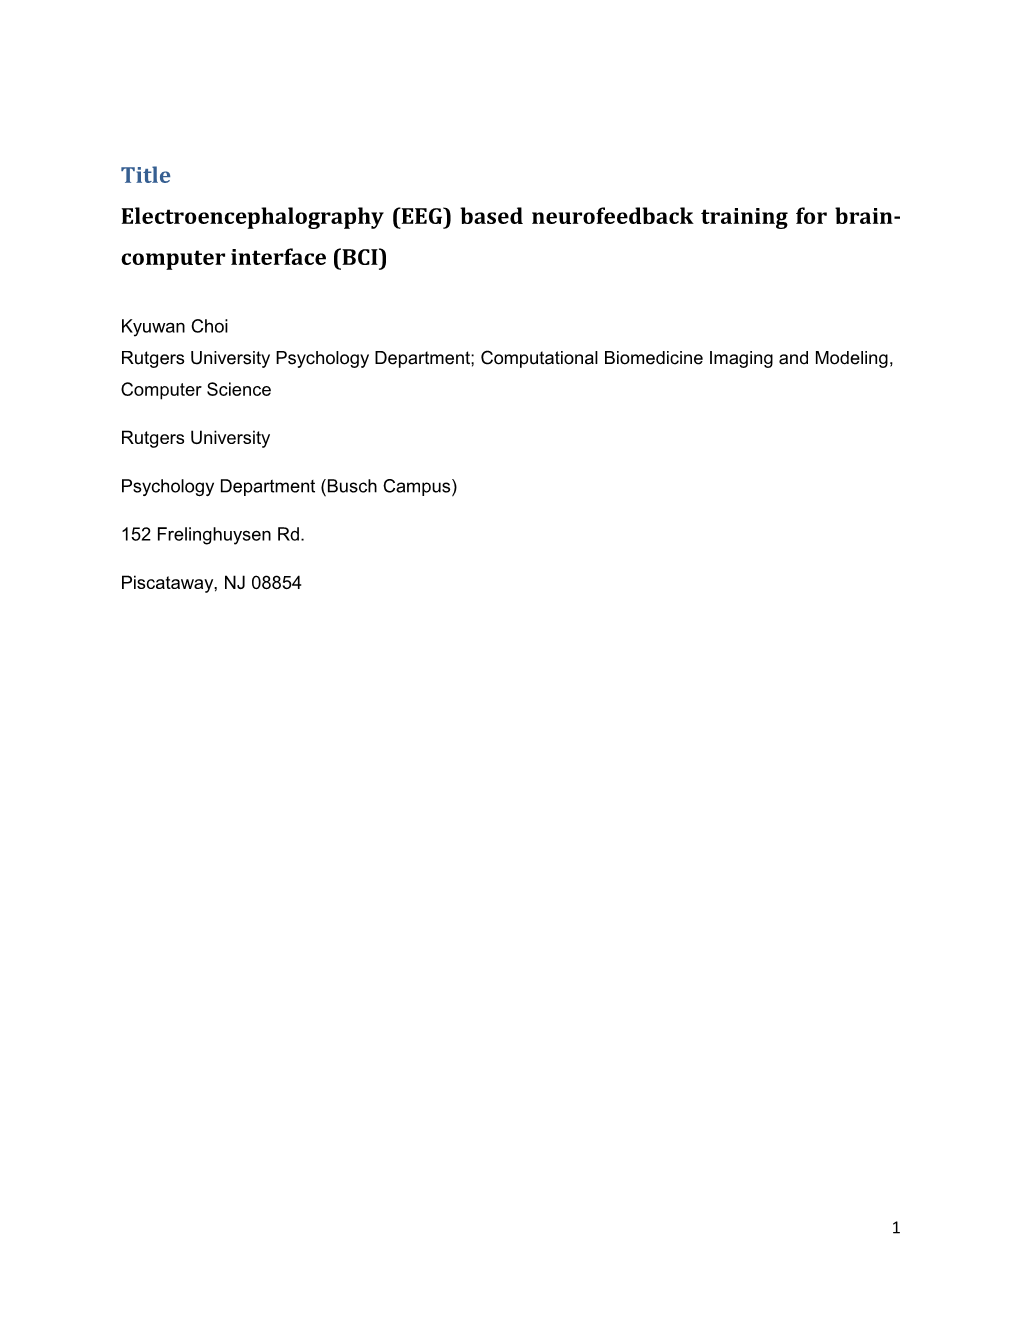 EEG) Based Neurofeedback Training for Brain- Computer Interface (BCI)